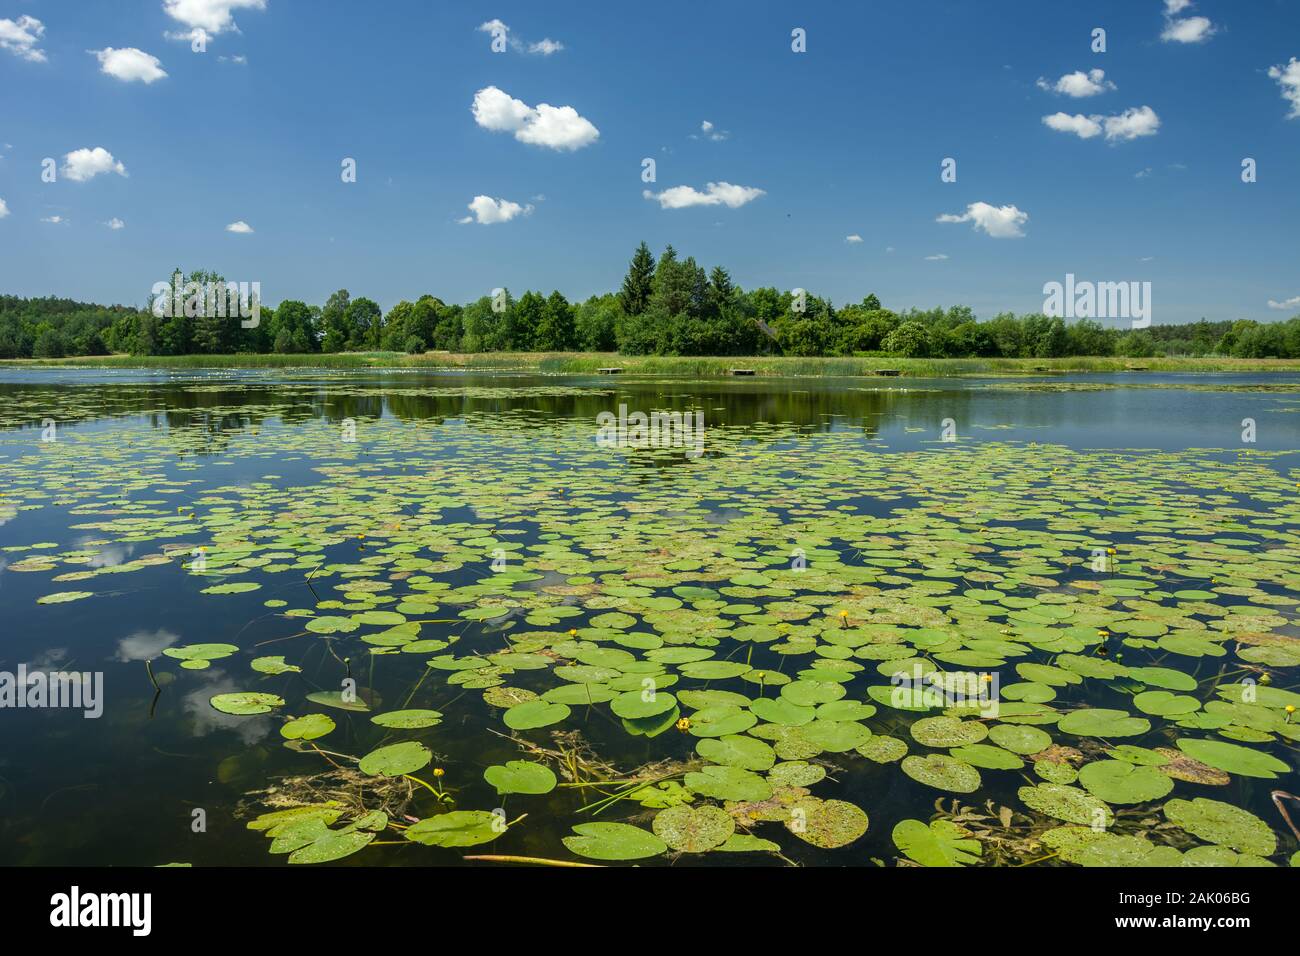 Floating Lotus Blätter auf dem See, Bäume am Ufer und Himmel. Dubienka, Polen Stockfoto